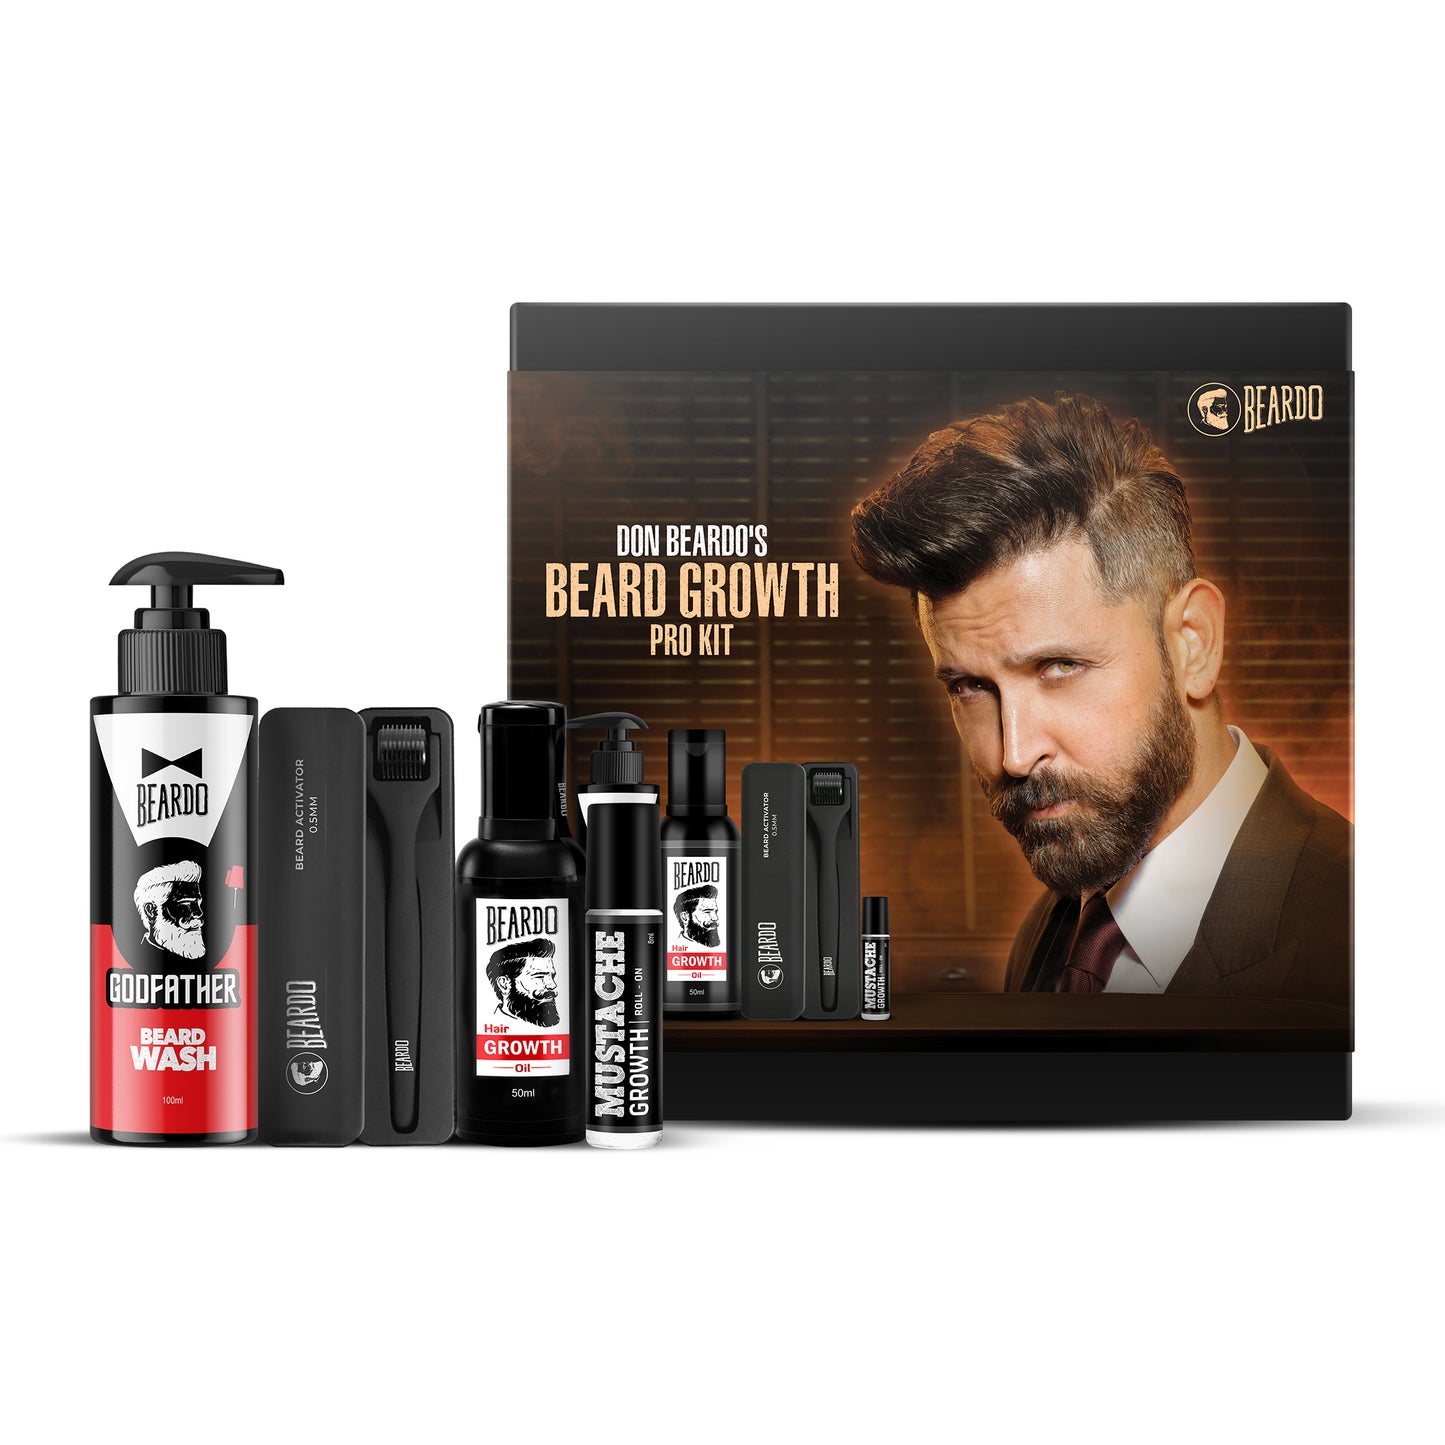 beardo beard growth kit, don beardo's beard growth pro kit beard kit, beard growth kit, beard care gift set